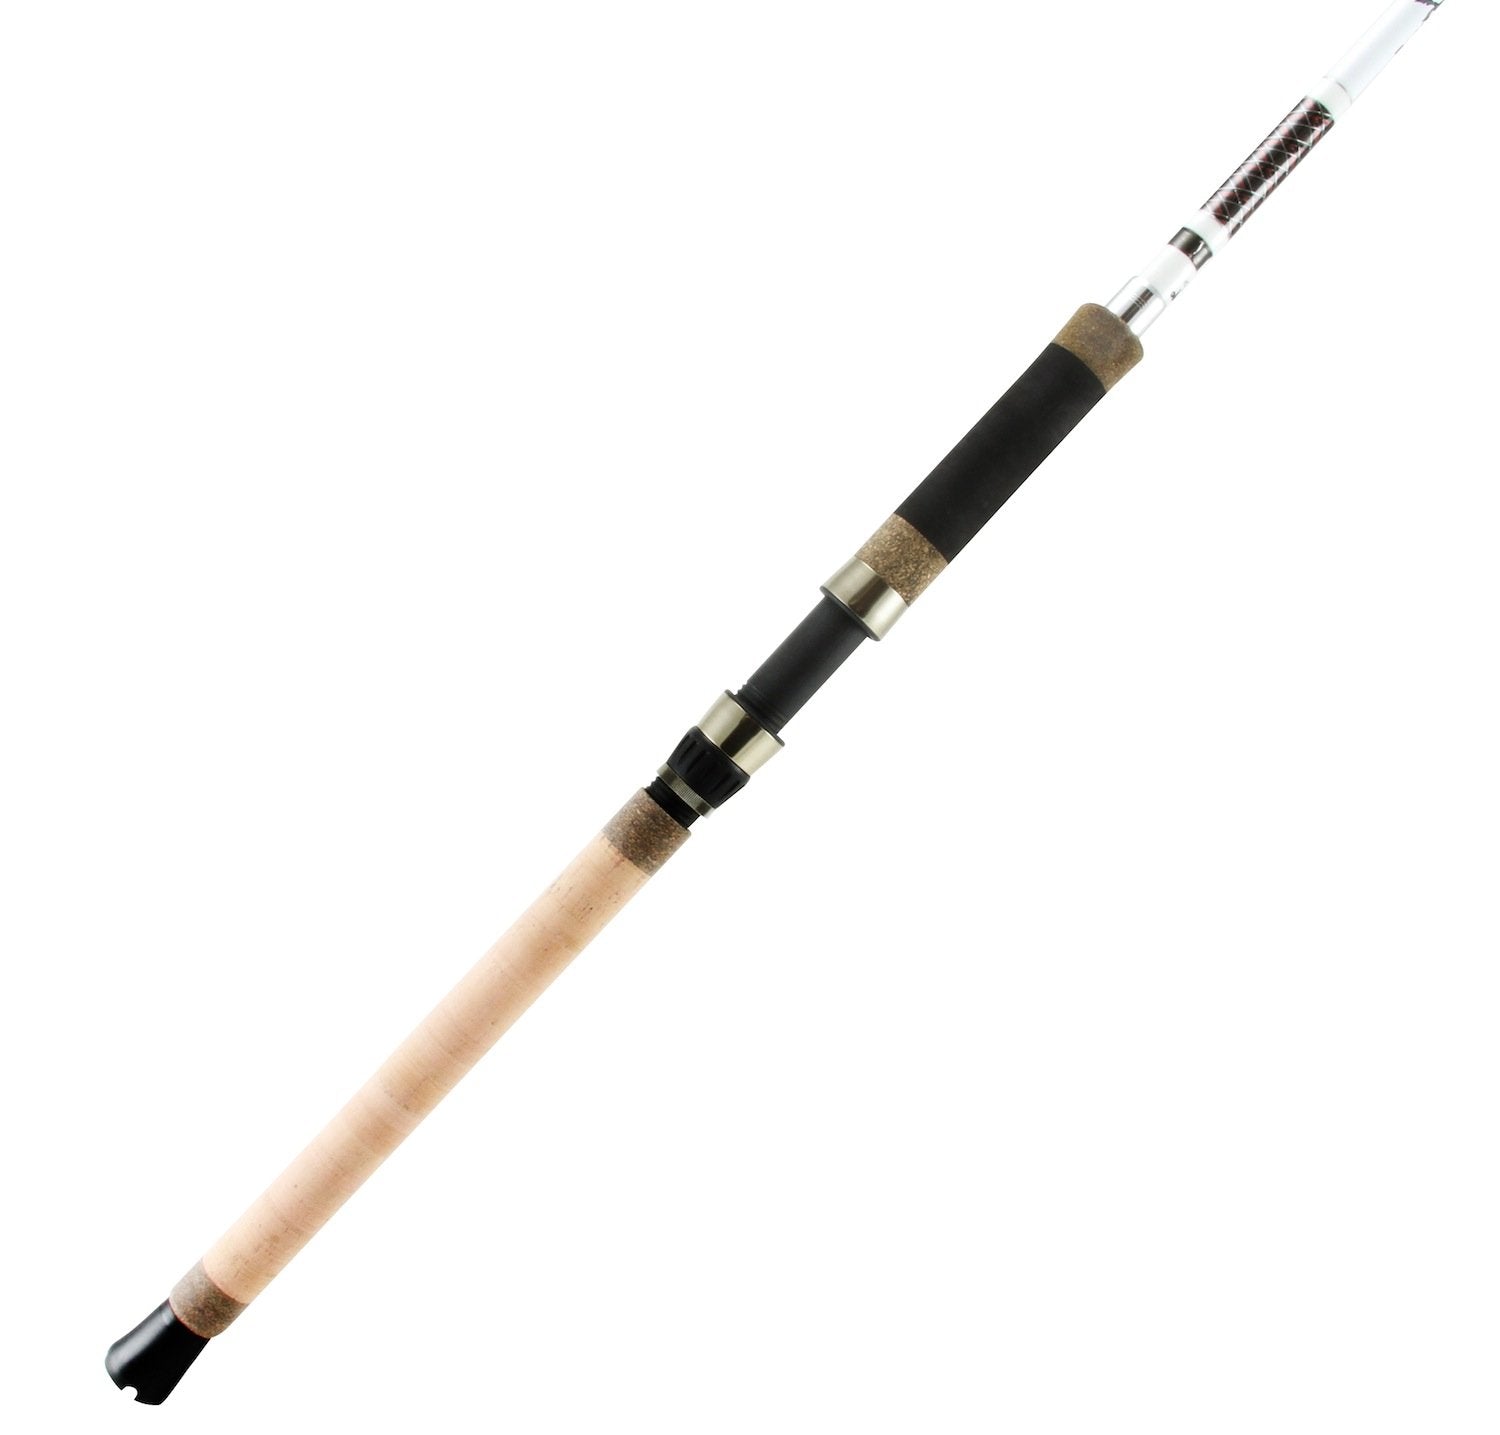 FOX EXCEL 12 ft 5 1/2 lb tc spod rod used carp fishing rod catfish